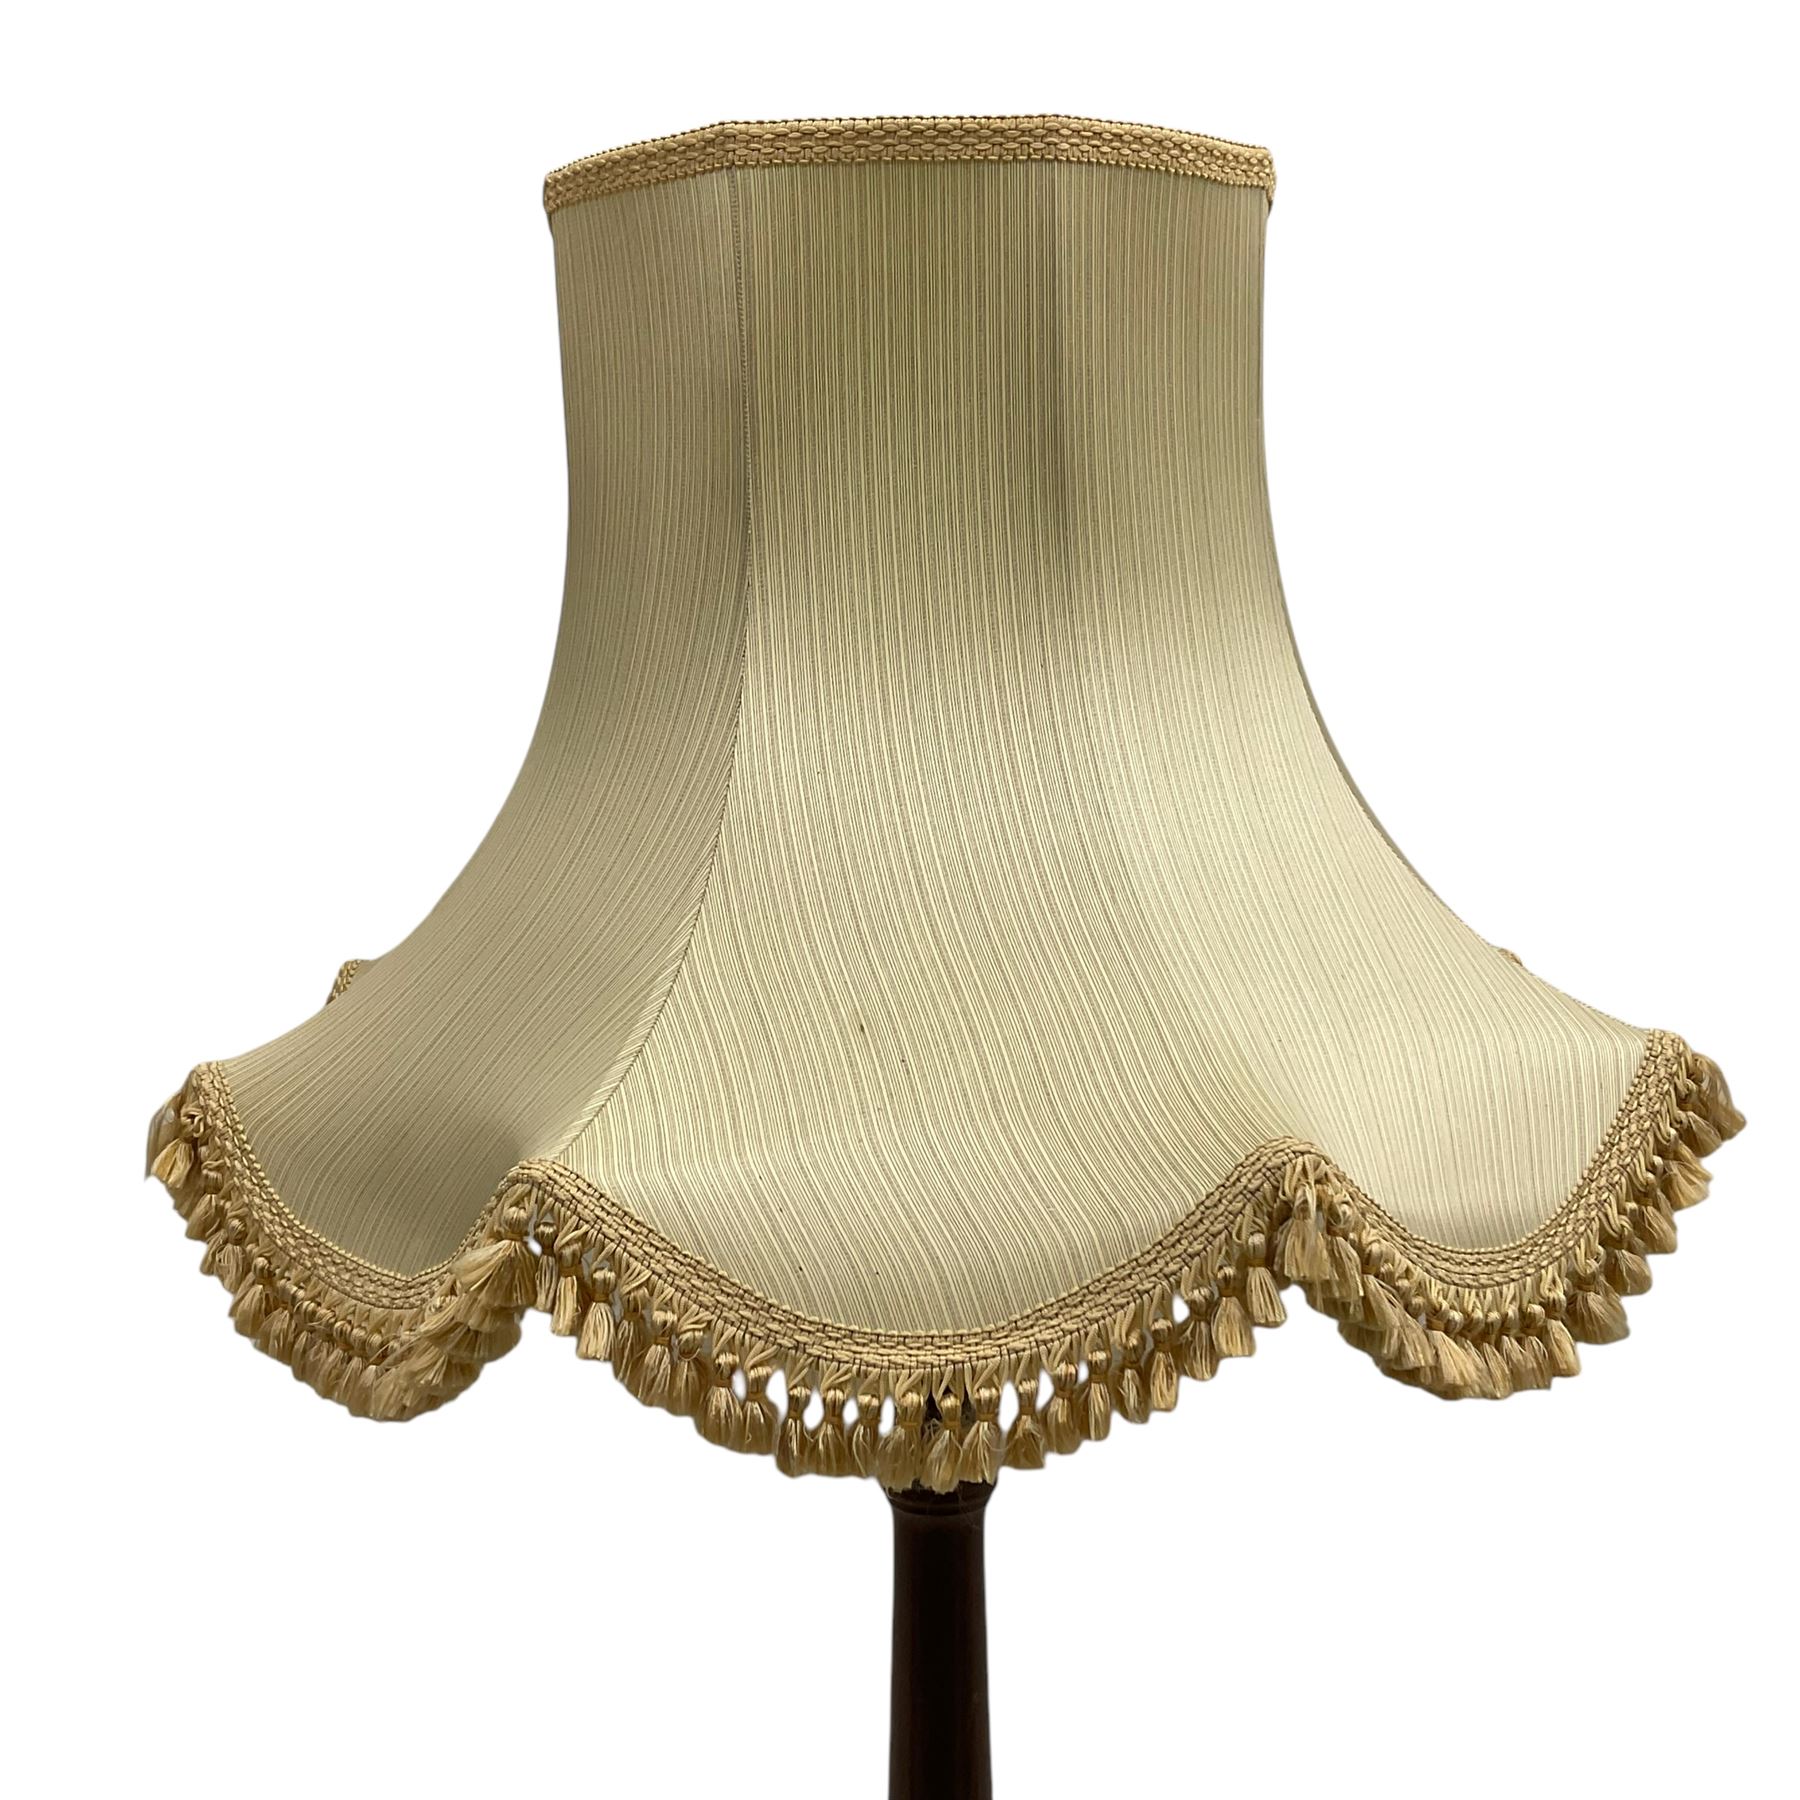 20th century walnut standard lamp - Image 3 of 4